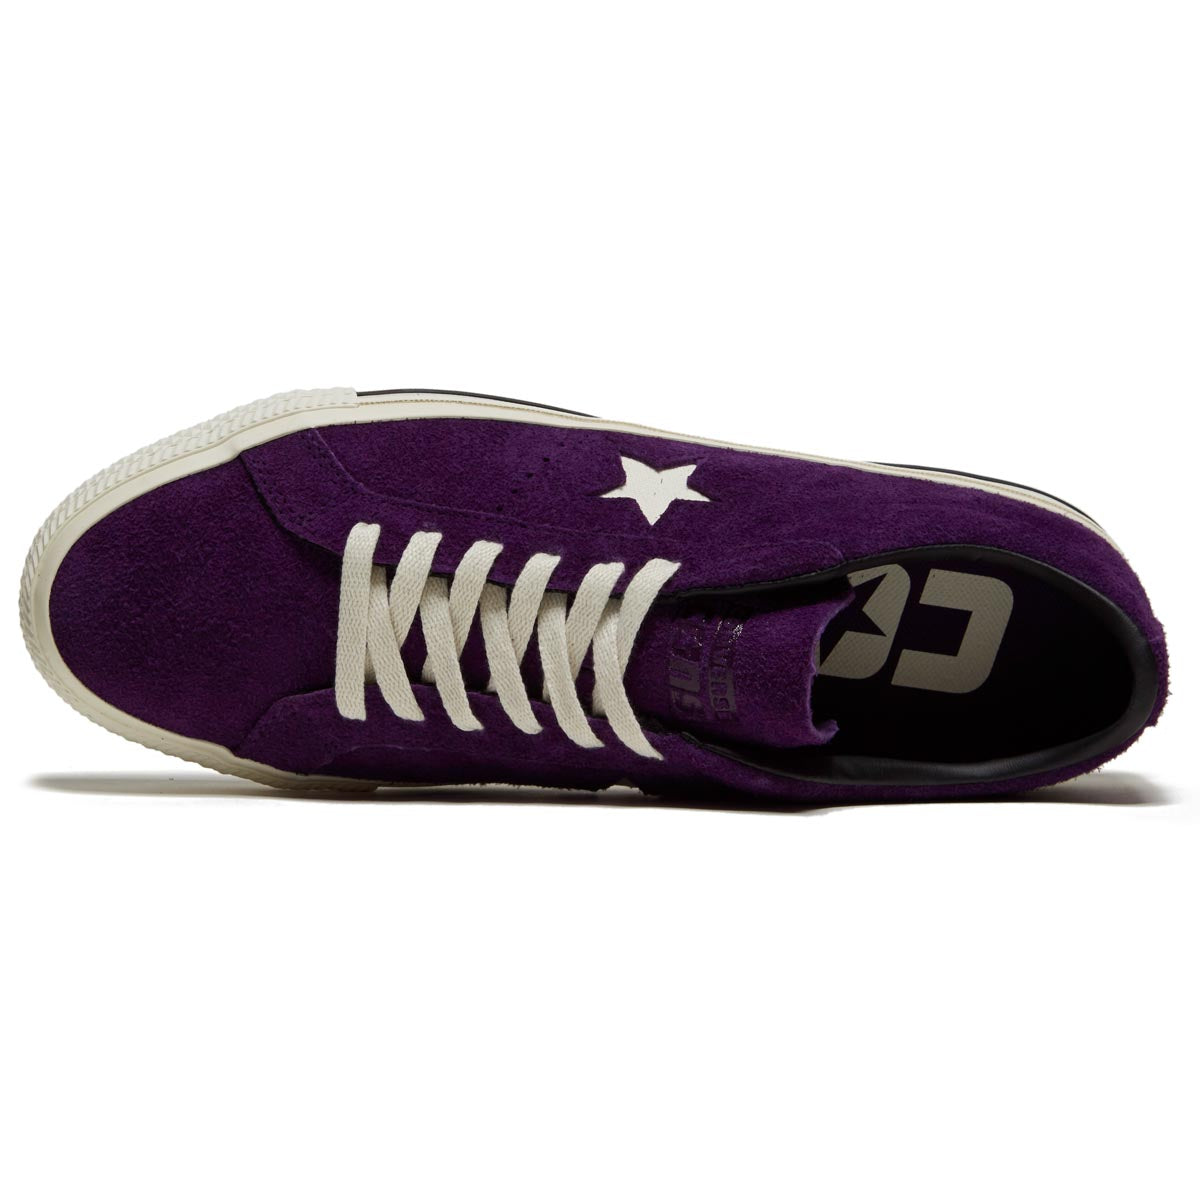 Converse One Star Pro Ox Shoes - Night Purple/Egret/Black image 3